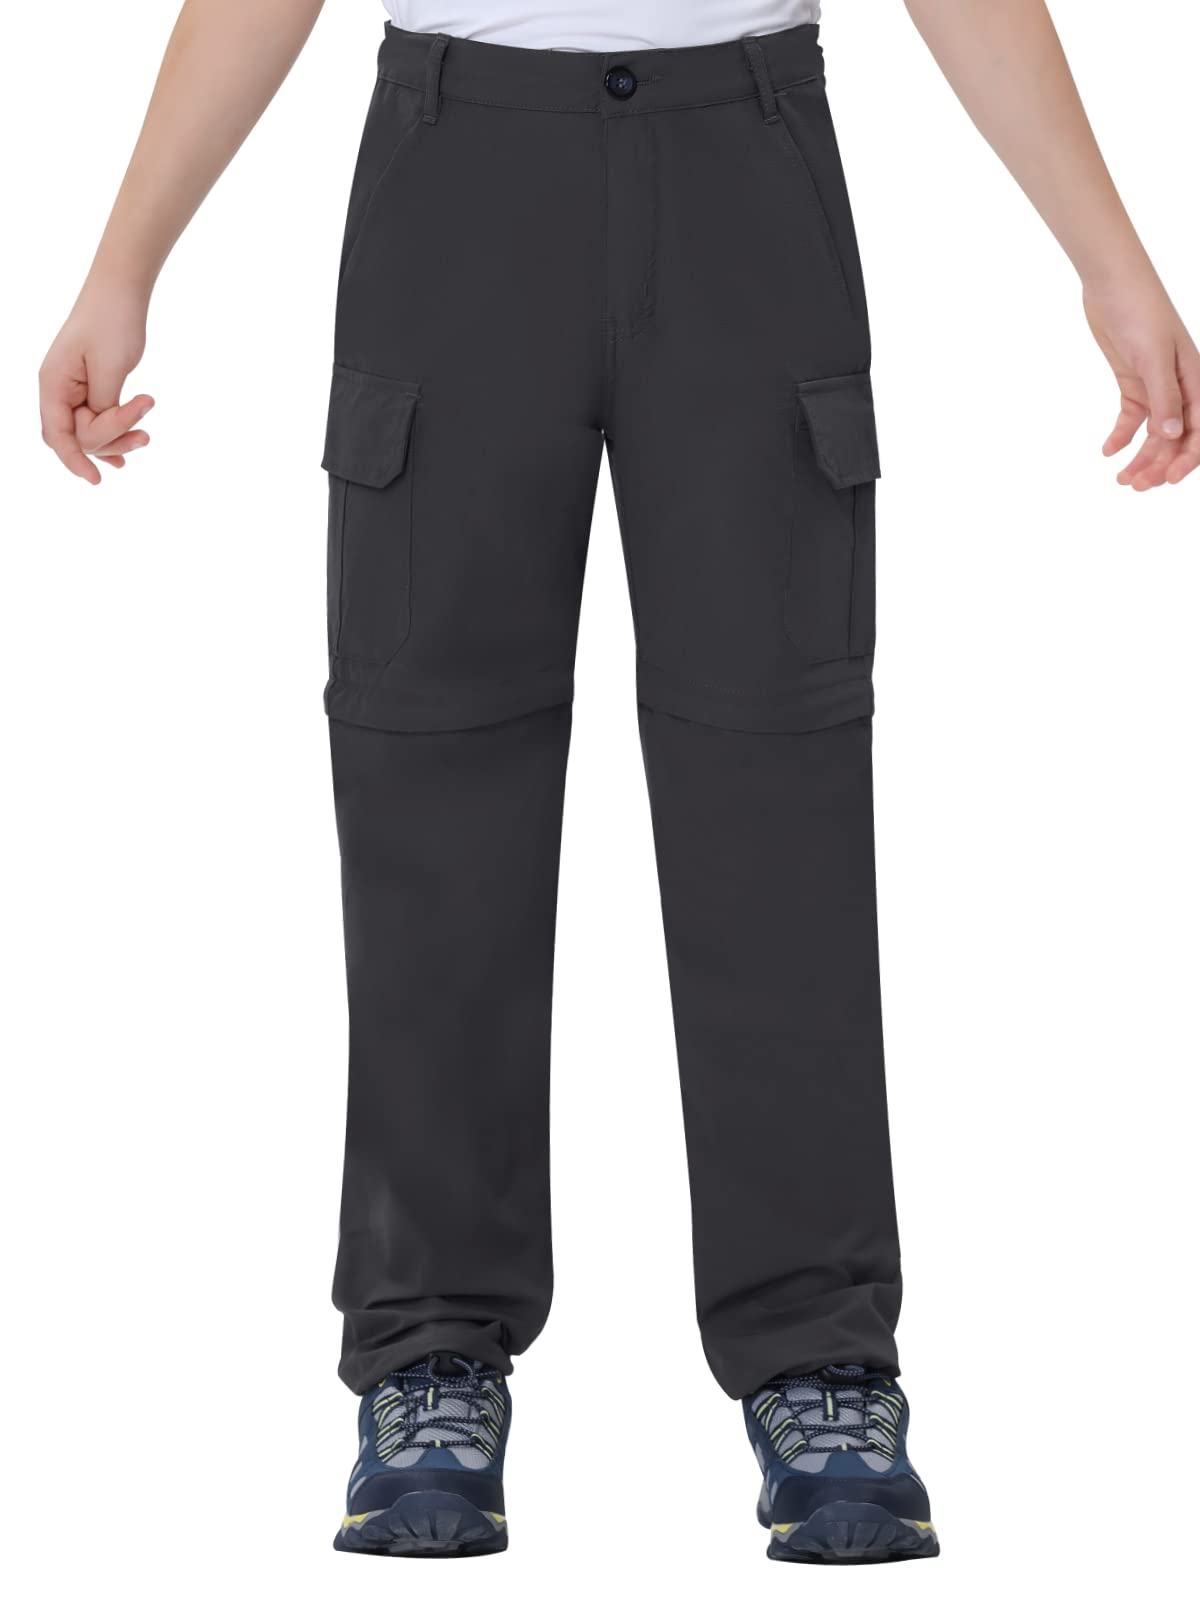 Kids Boy's Cargo Pants Hip Hop Trousers Dance Sweatpants Workout Bottoms  Jazz | eBay